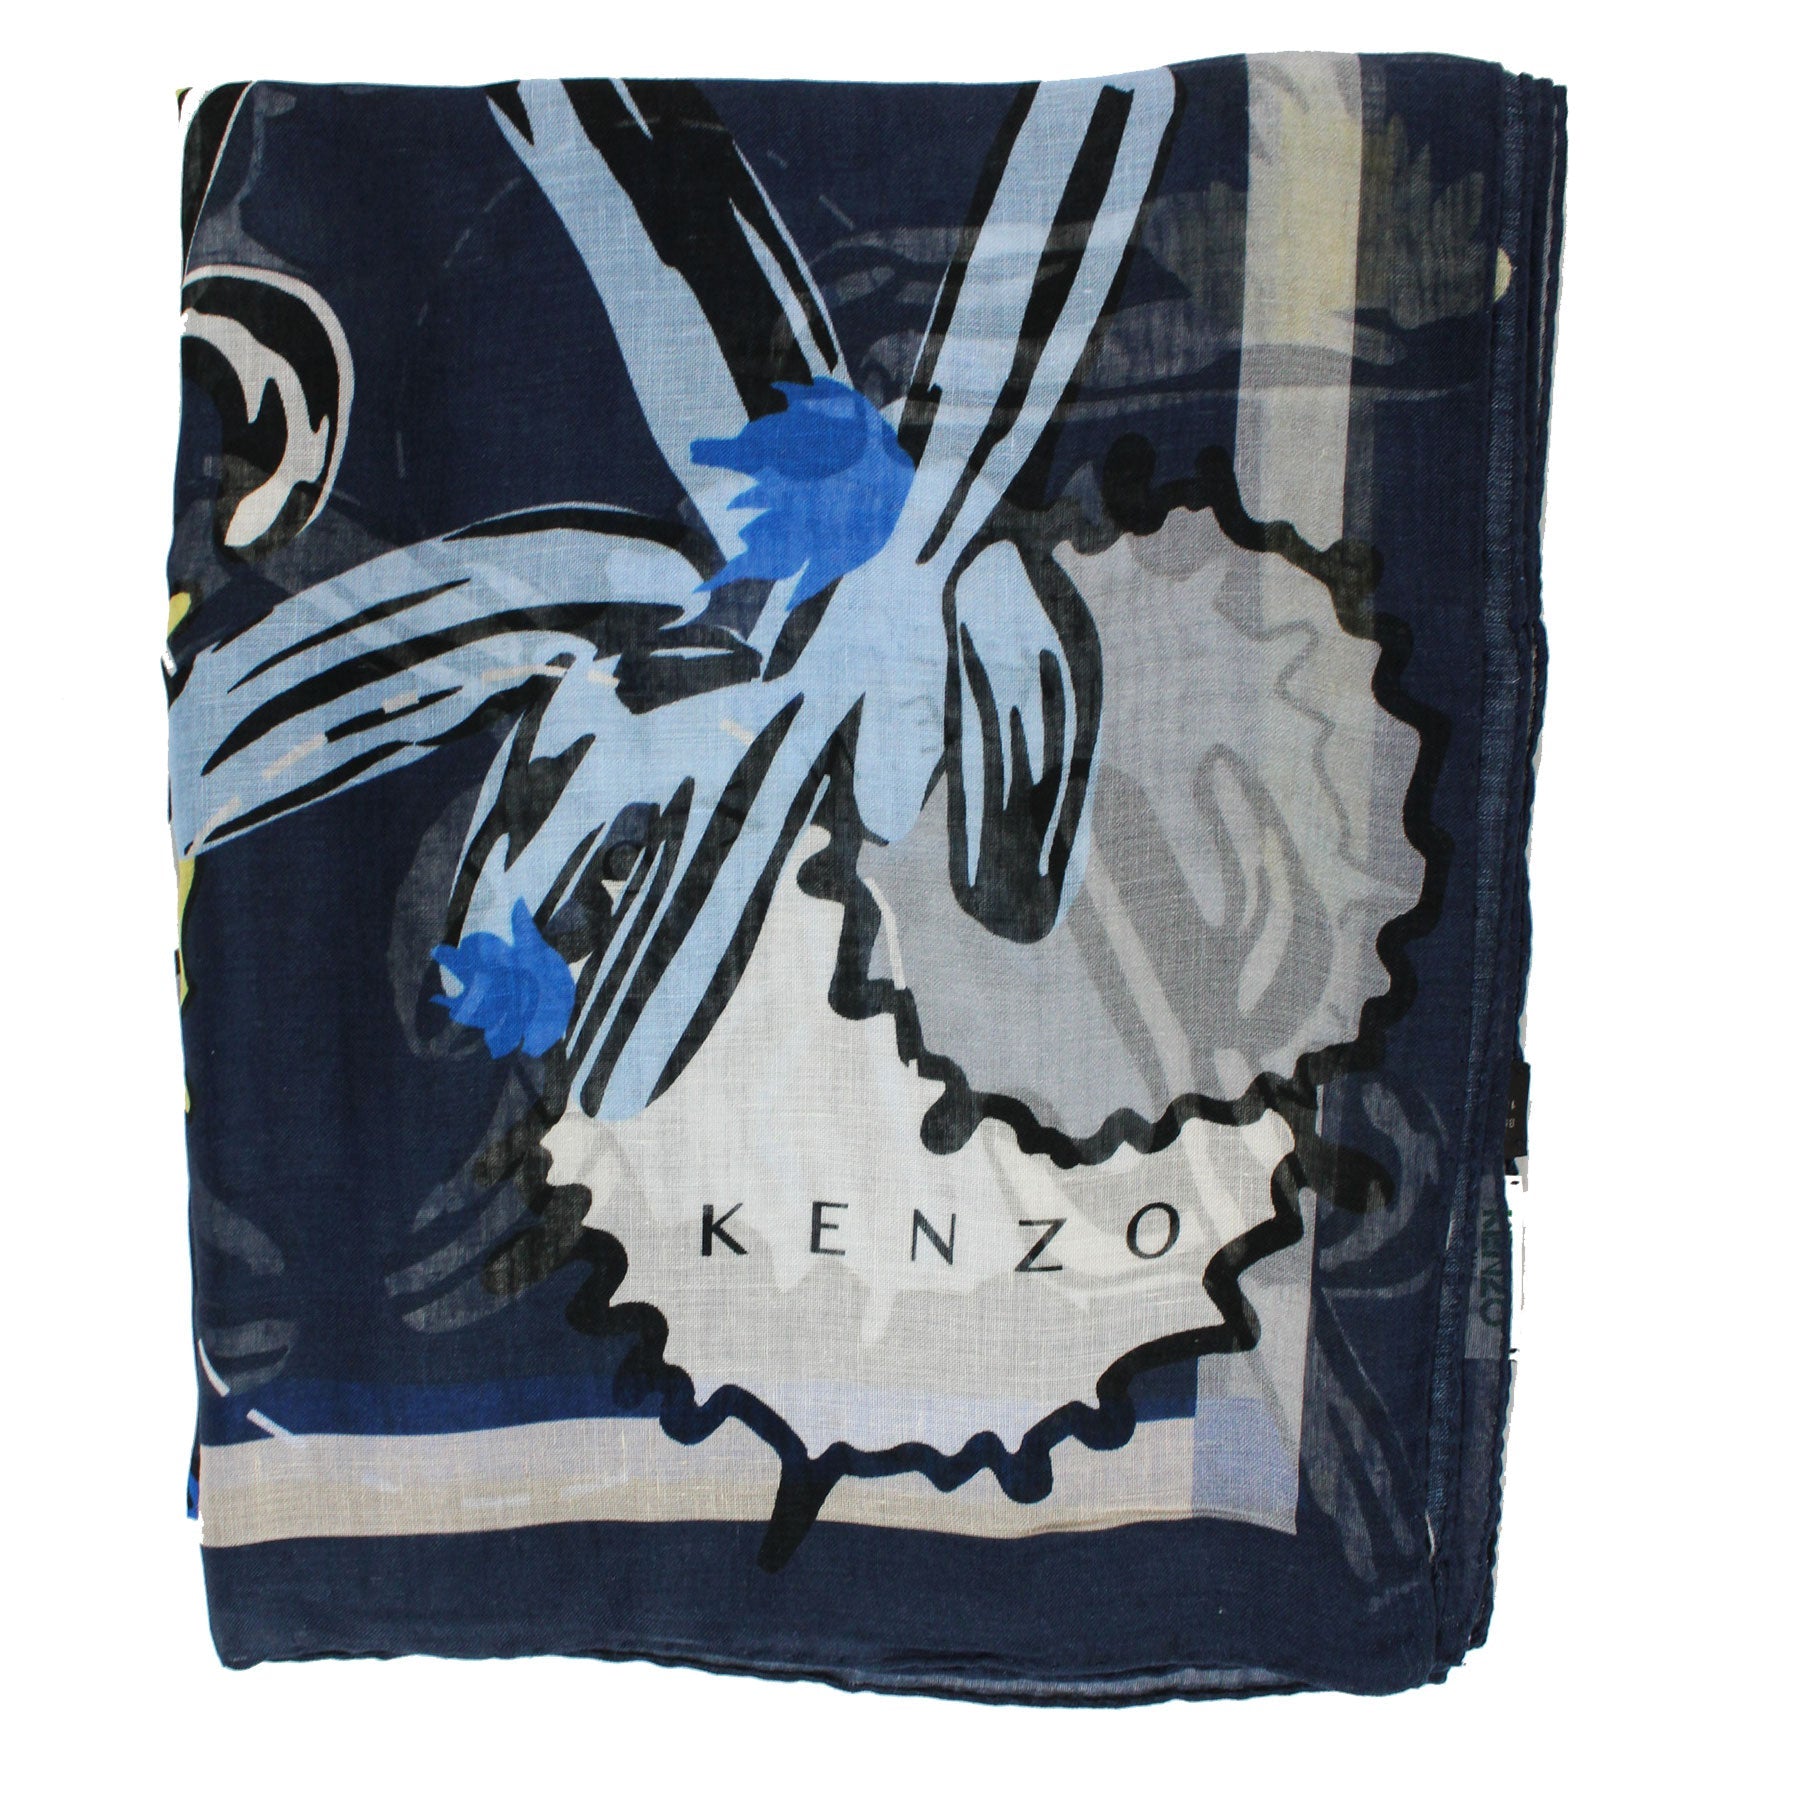 Authentic Kenzo scarf New